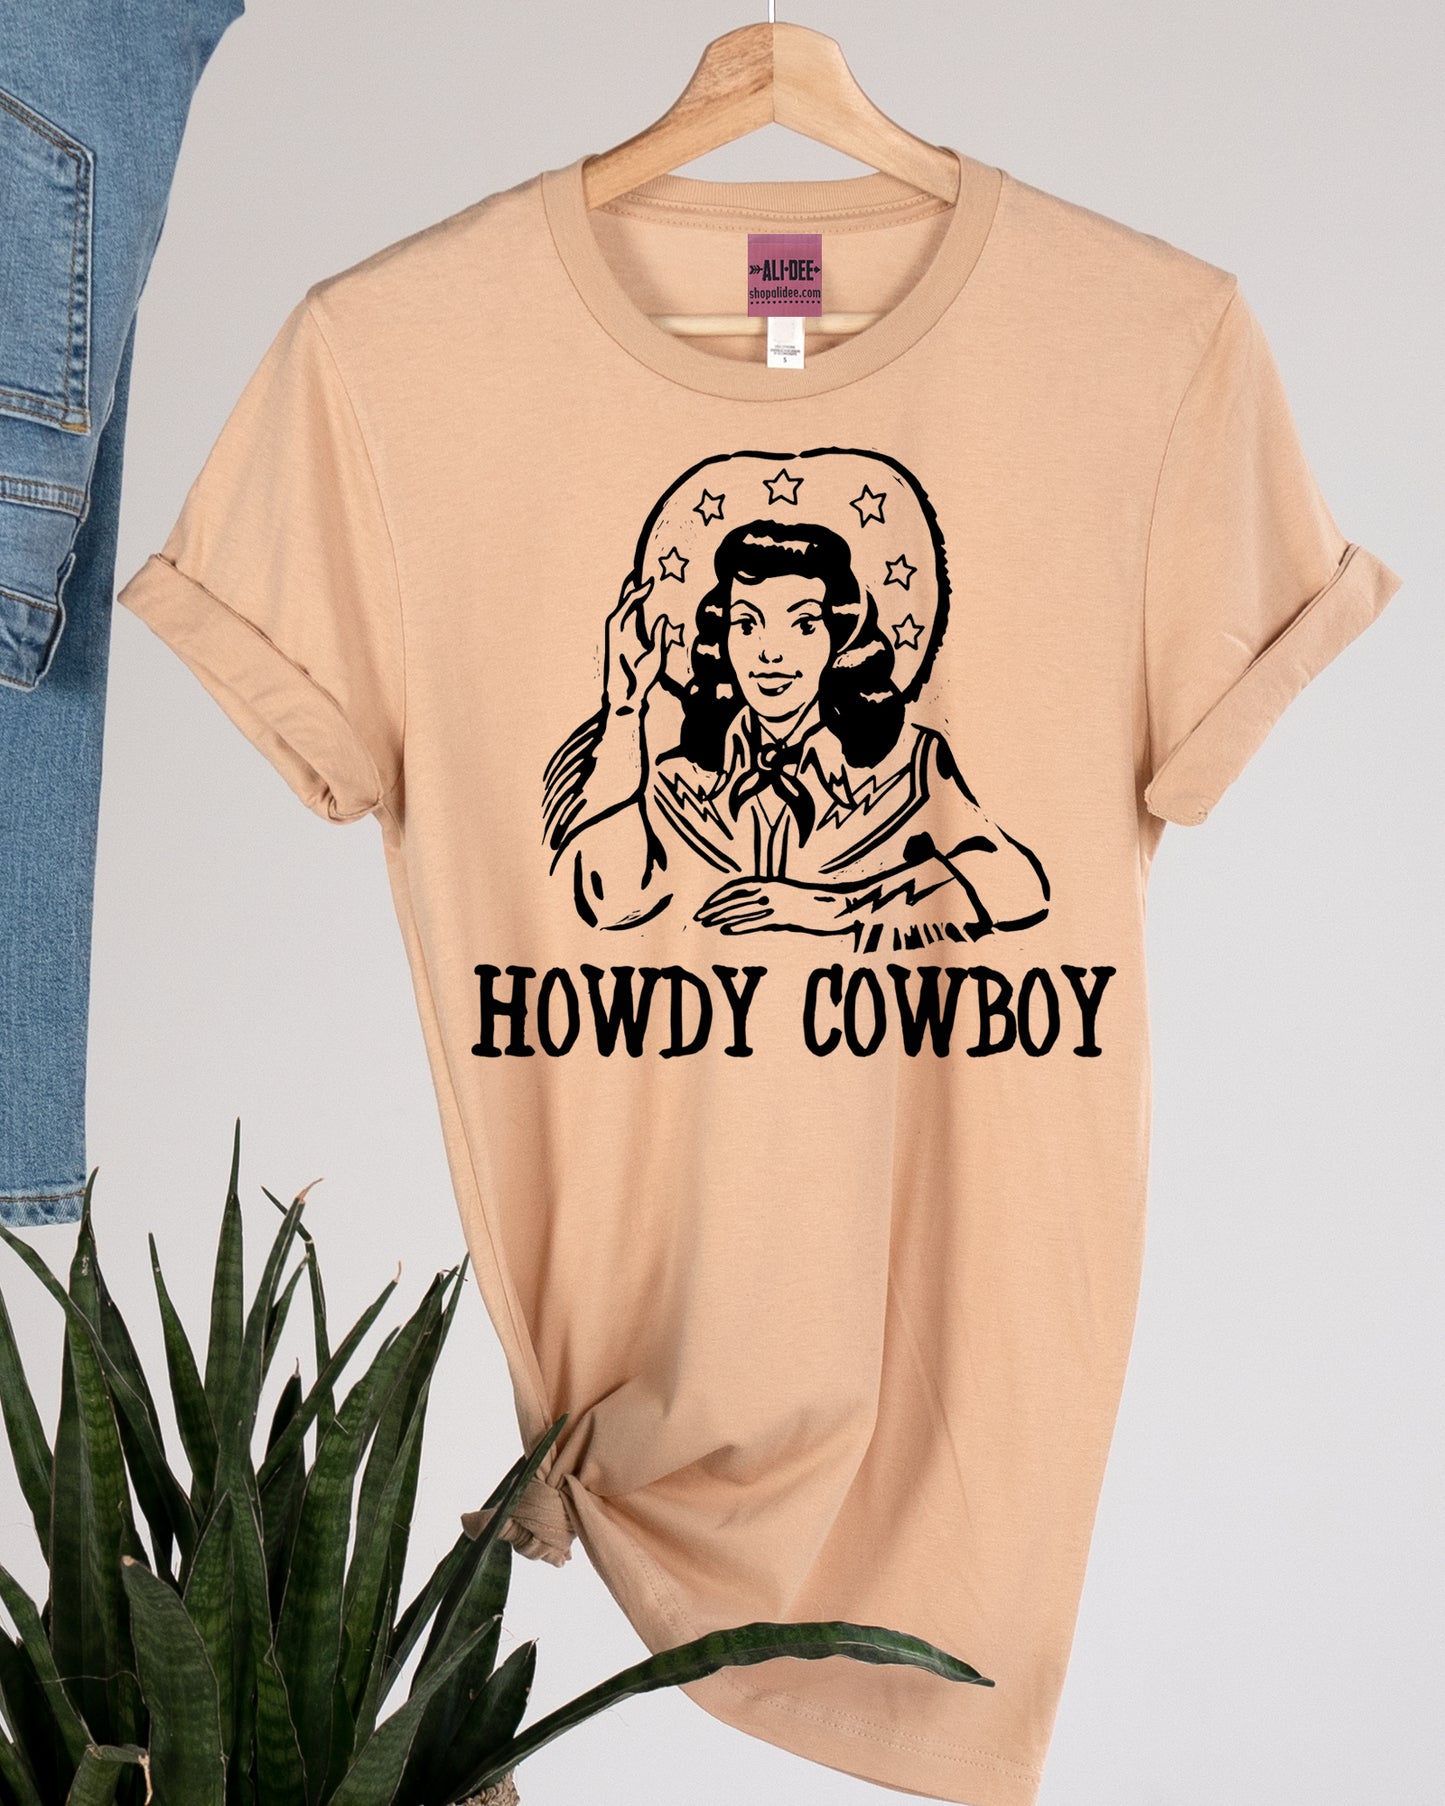 Howdy Cowboy Tee - Heather Sand Dune